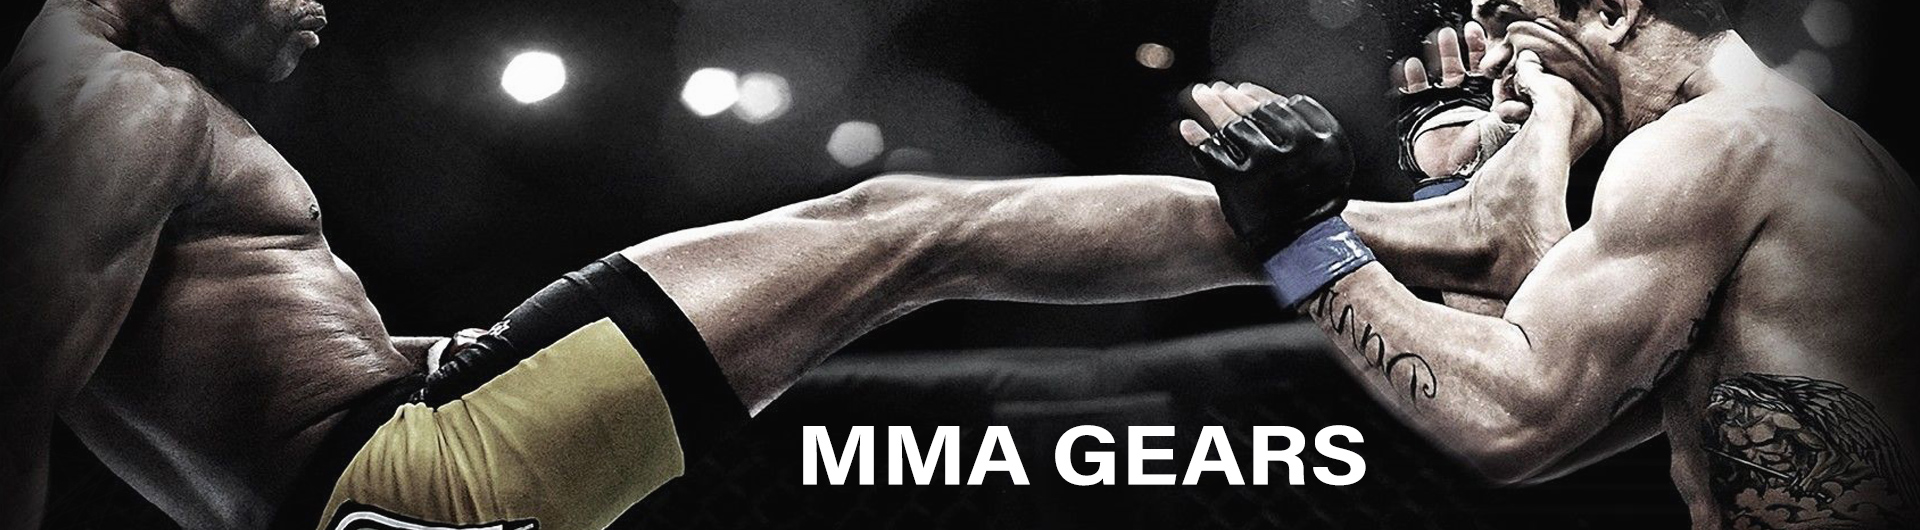 MMA Gears Banner